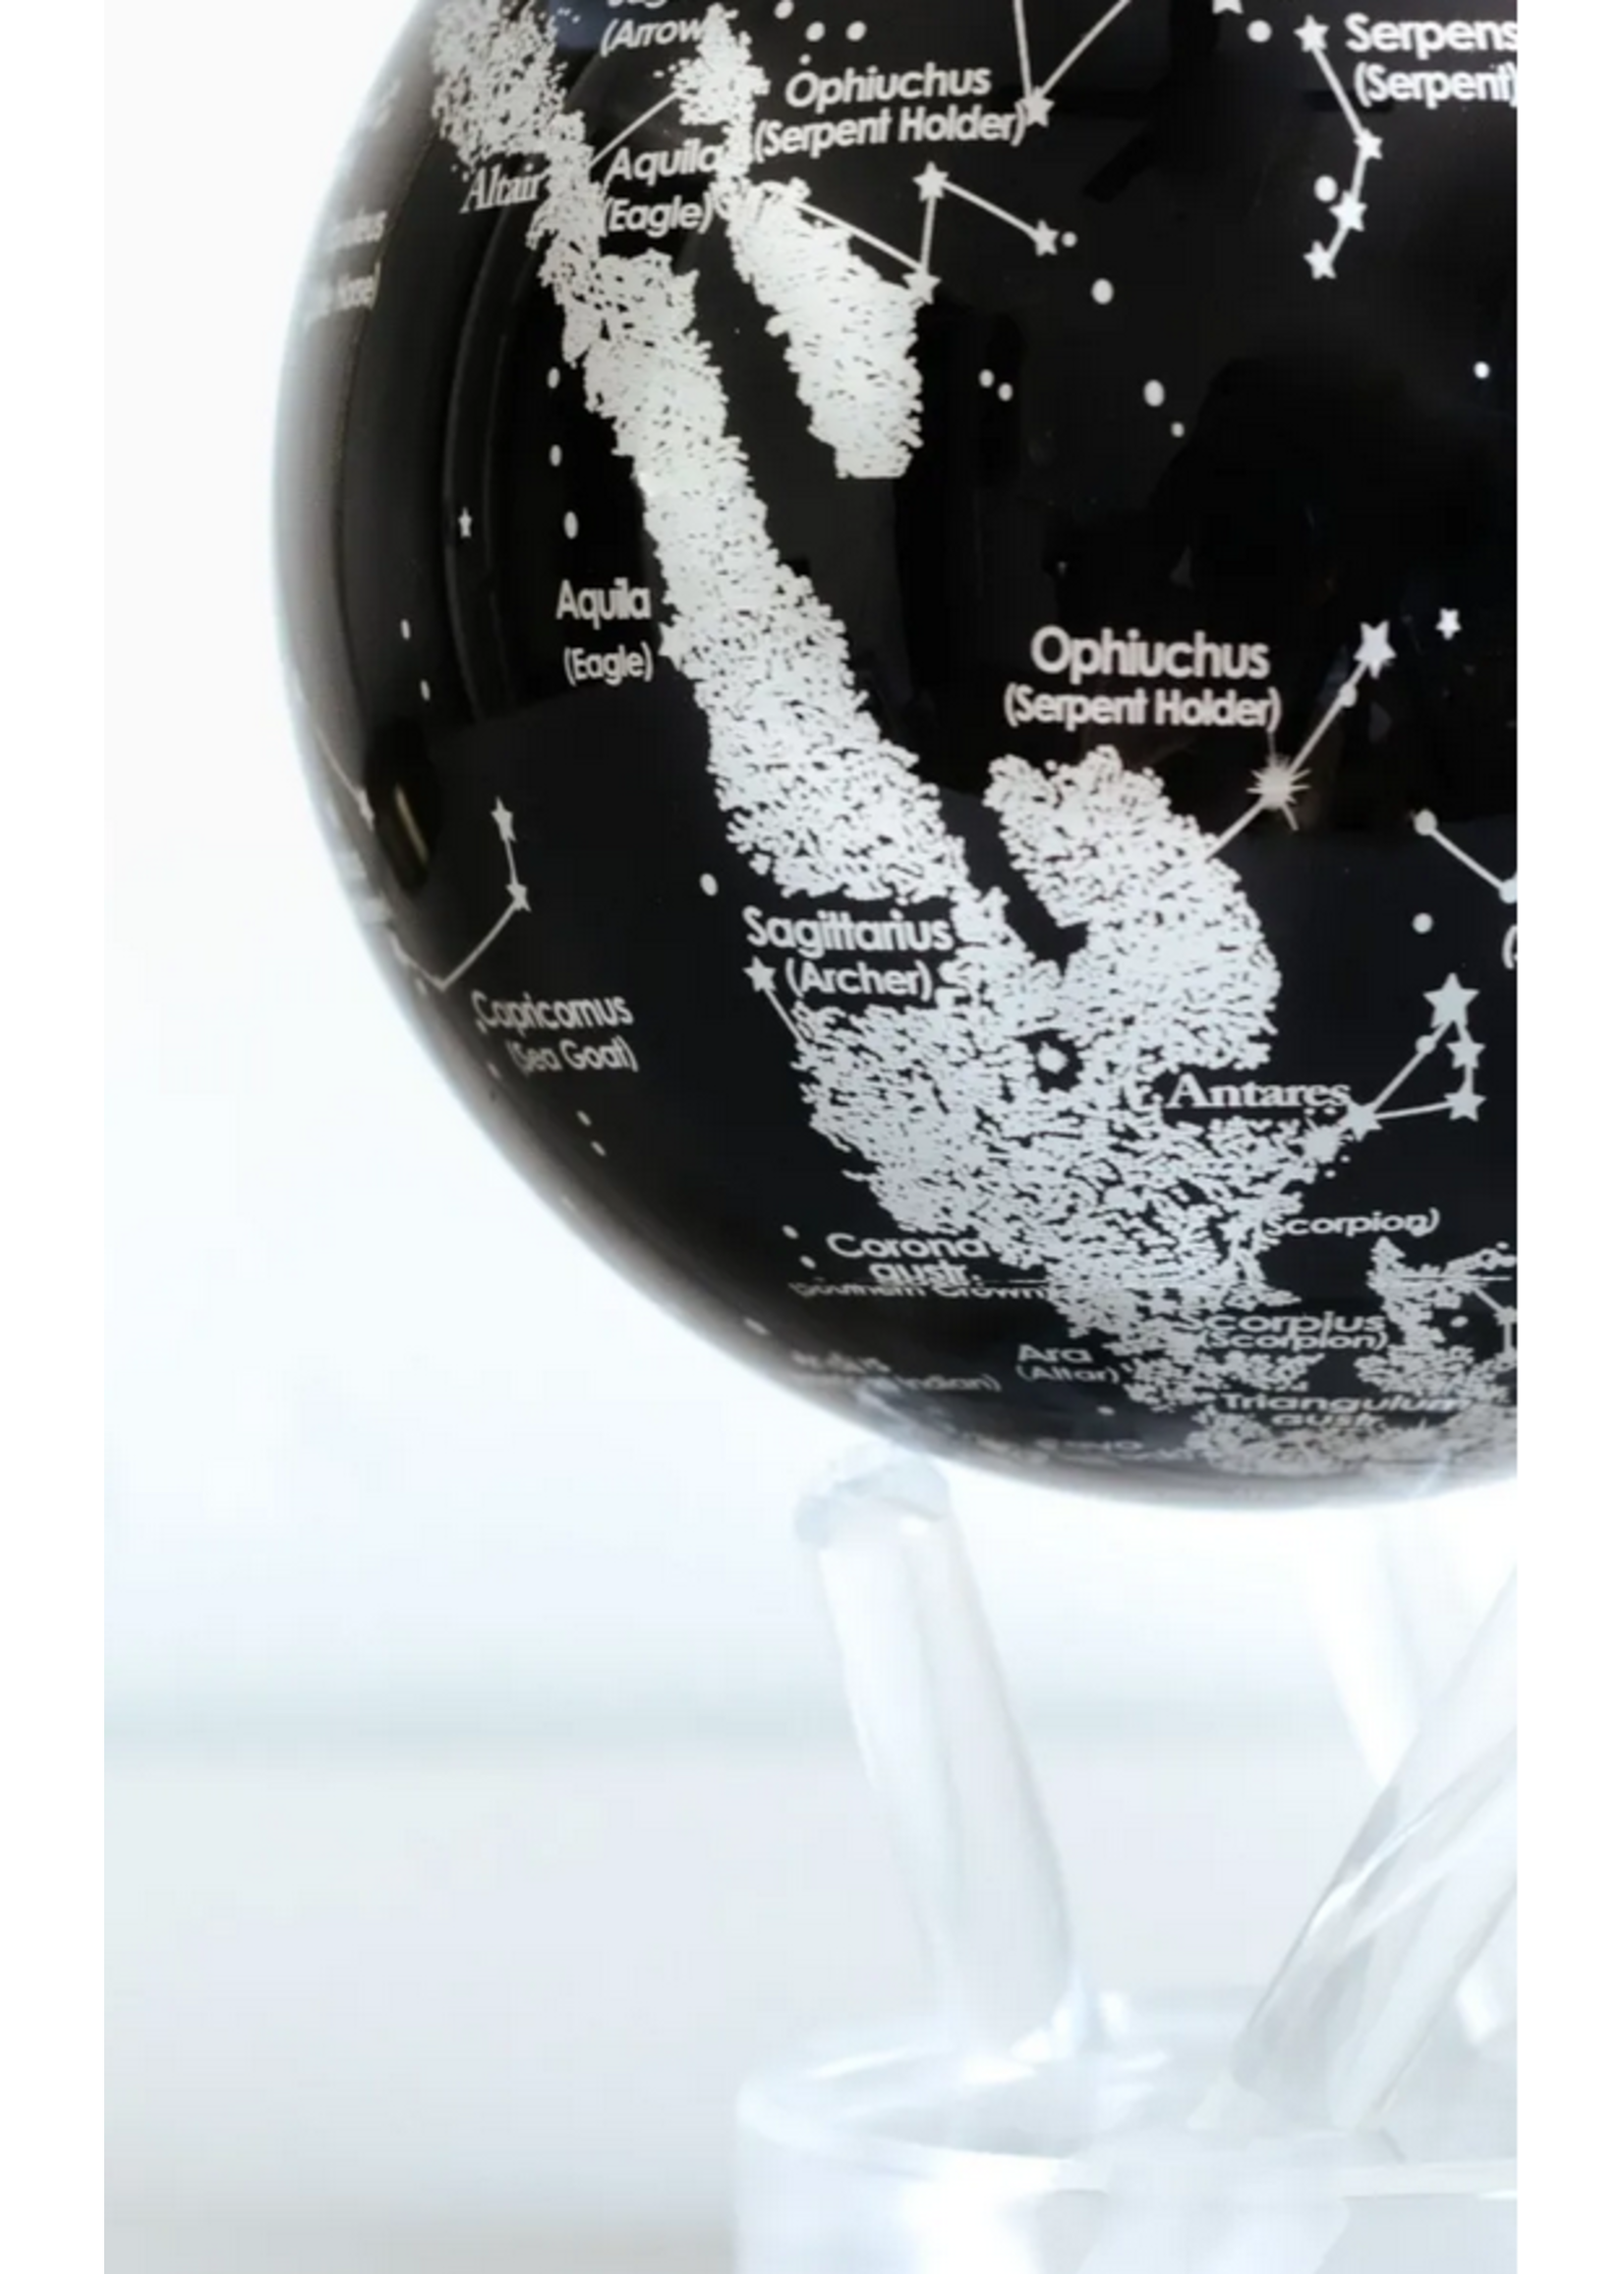 Mova | Rotating Globes Constellations (Black)